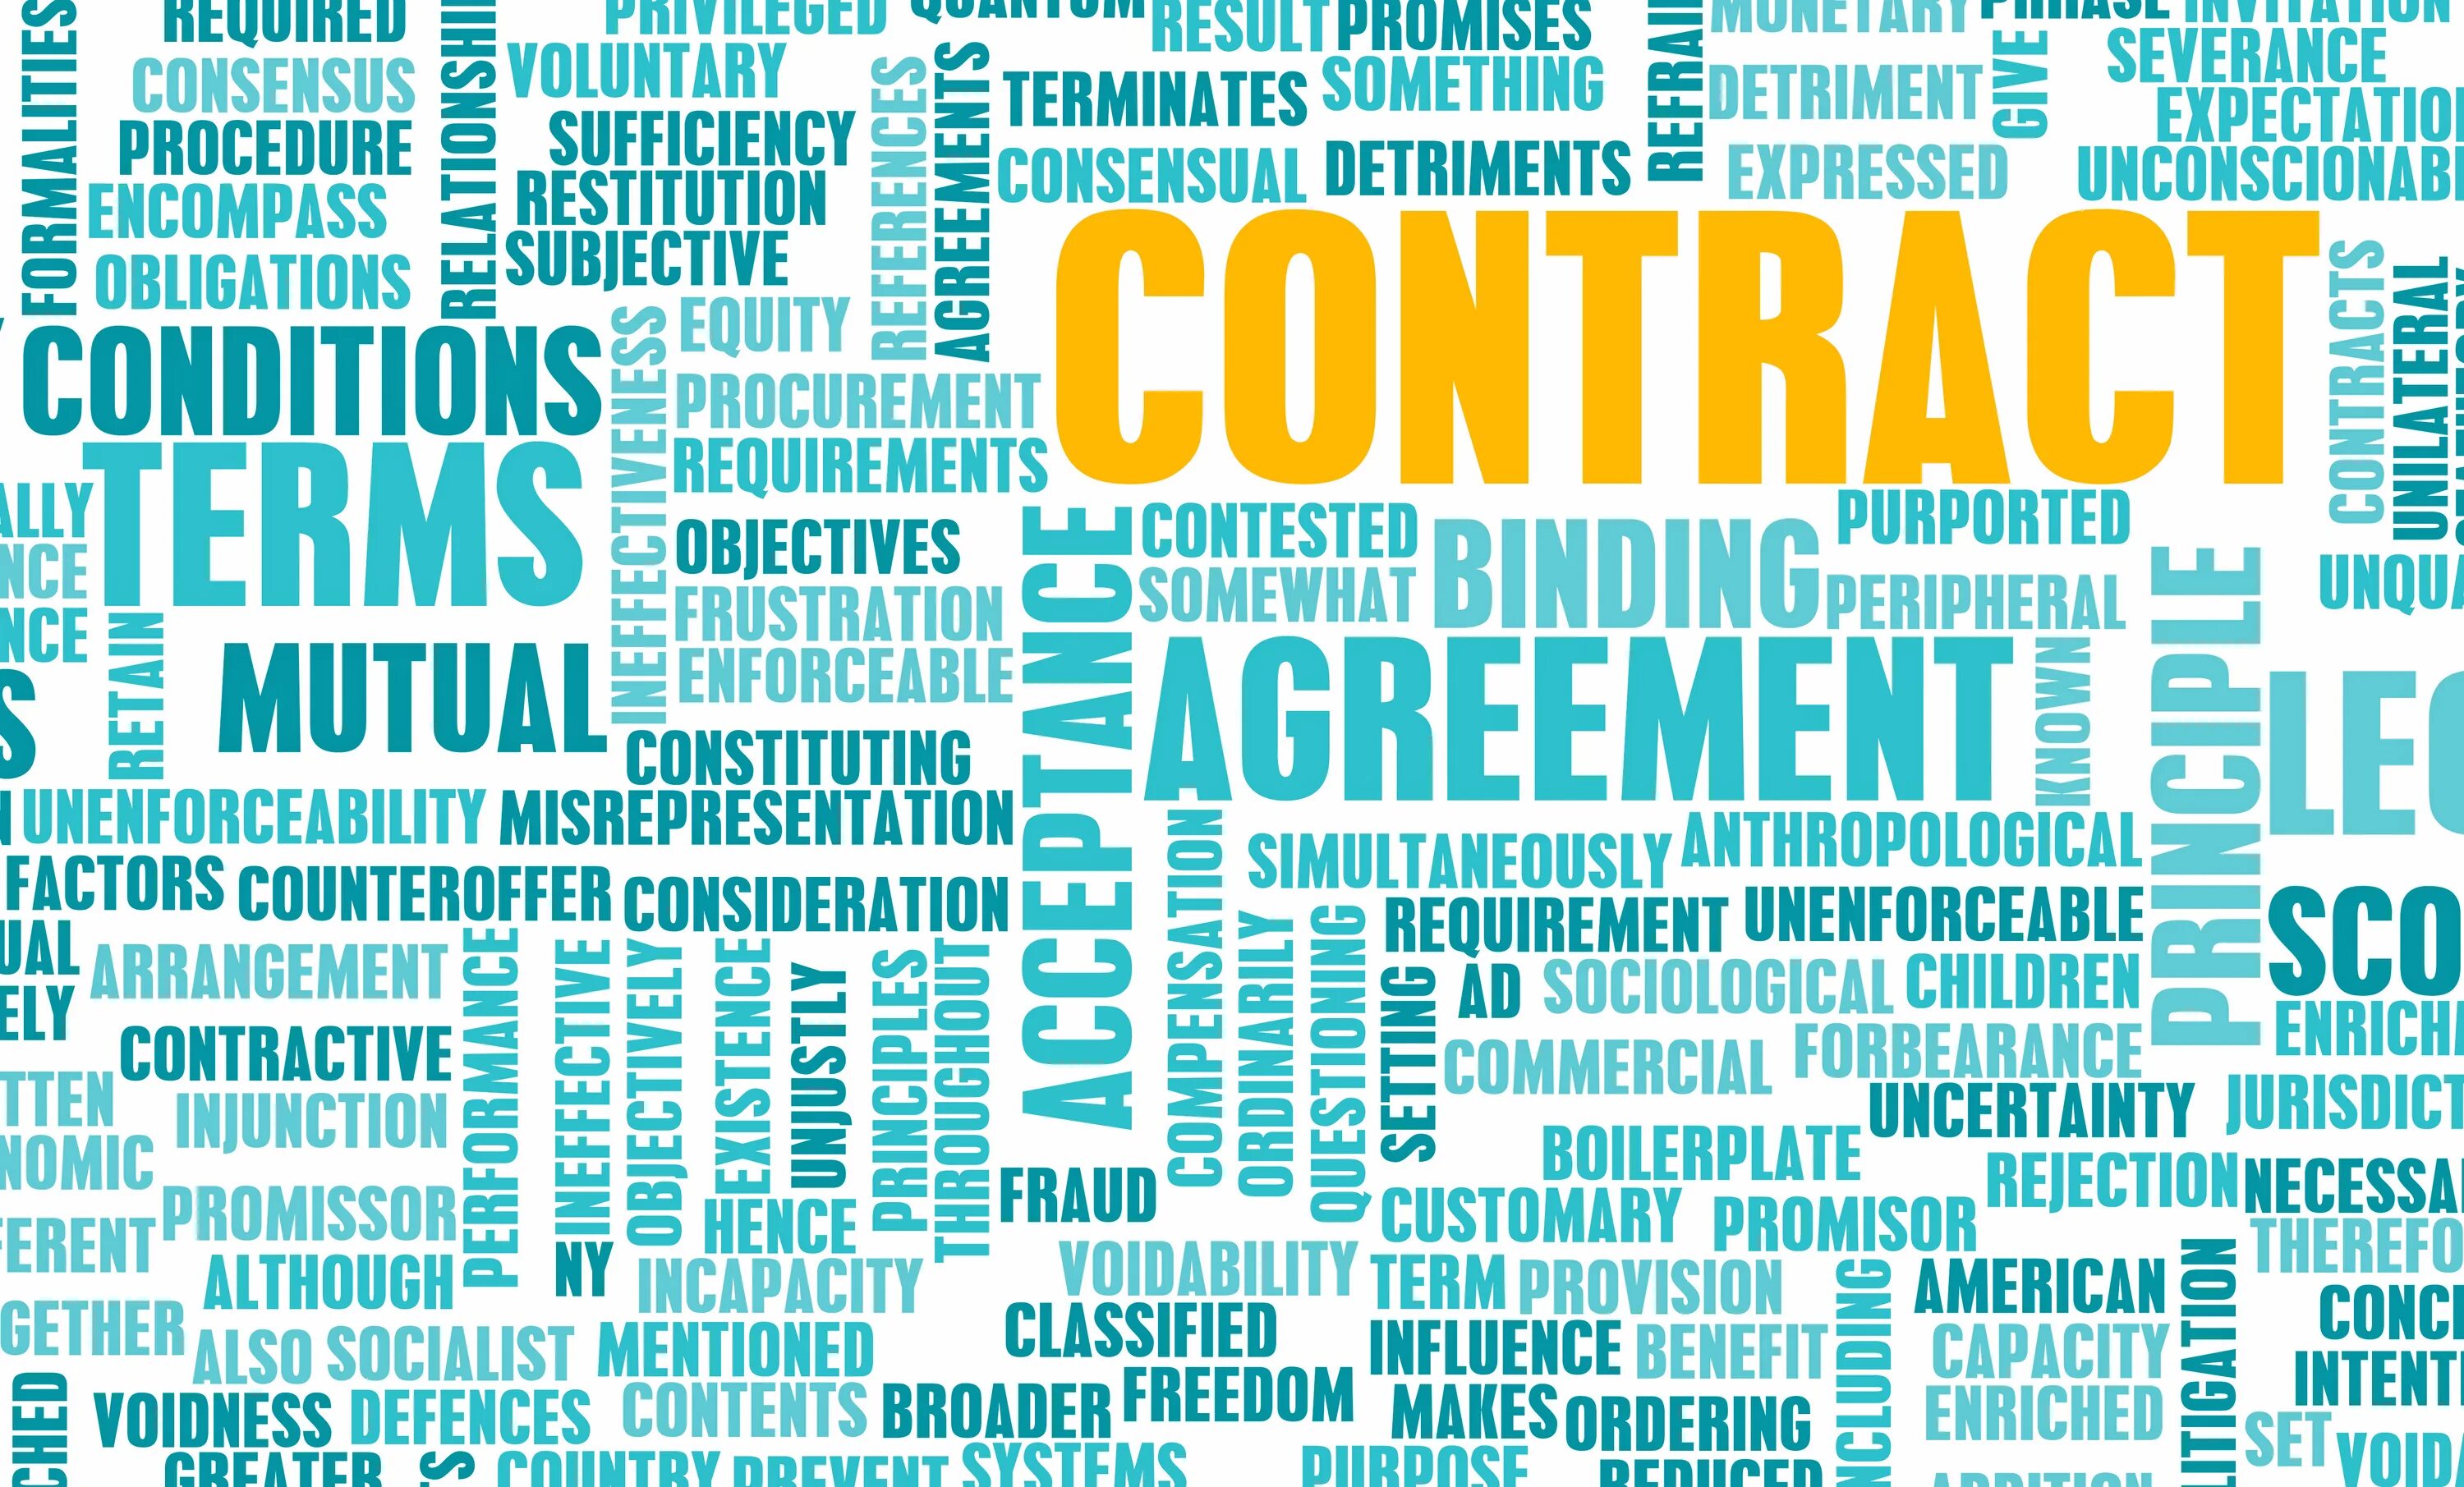 Договор абстрактно. Categories of misrepresentation Contract. Content broad